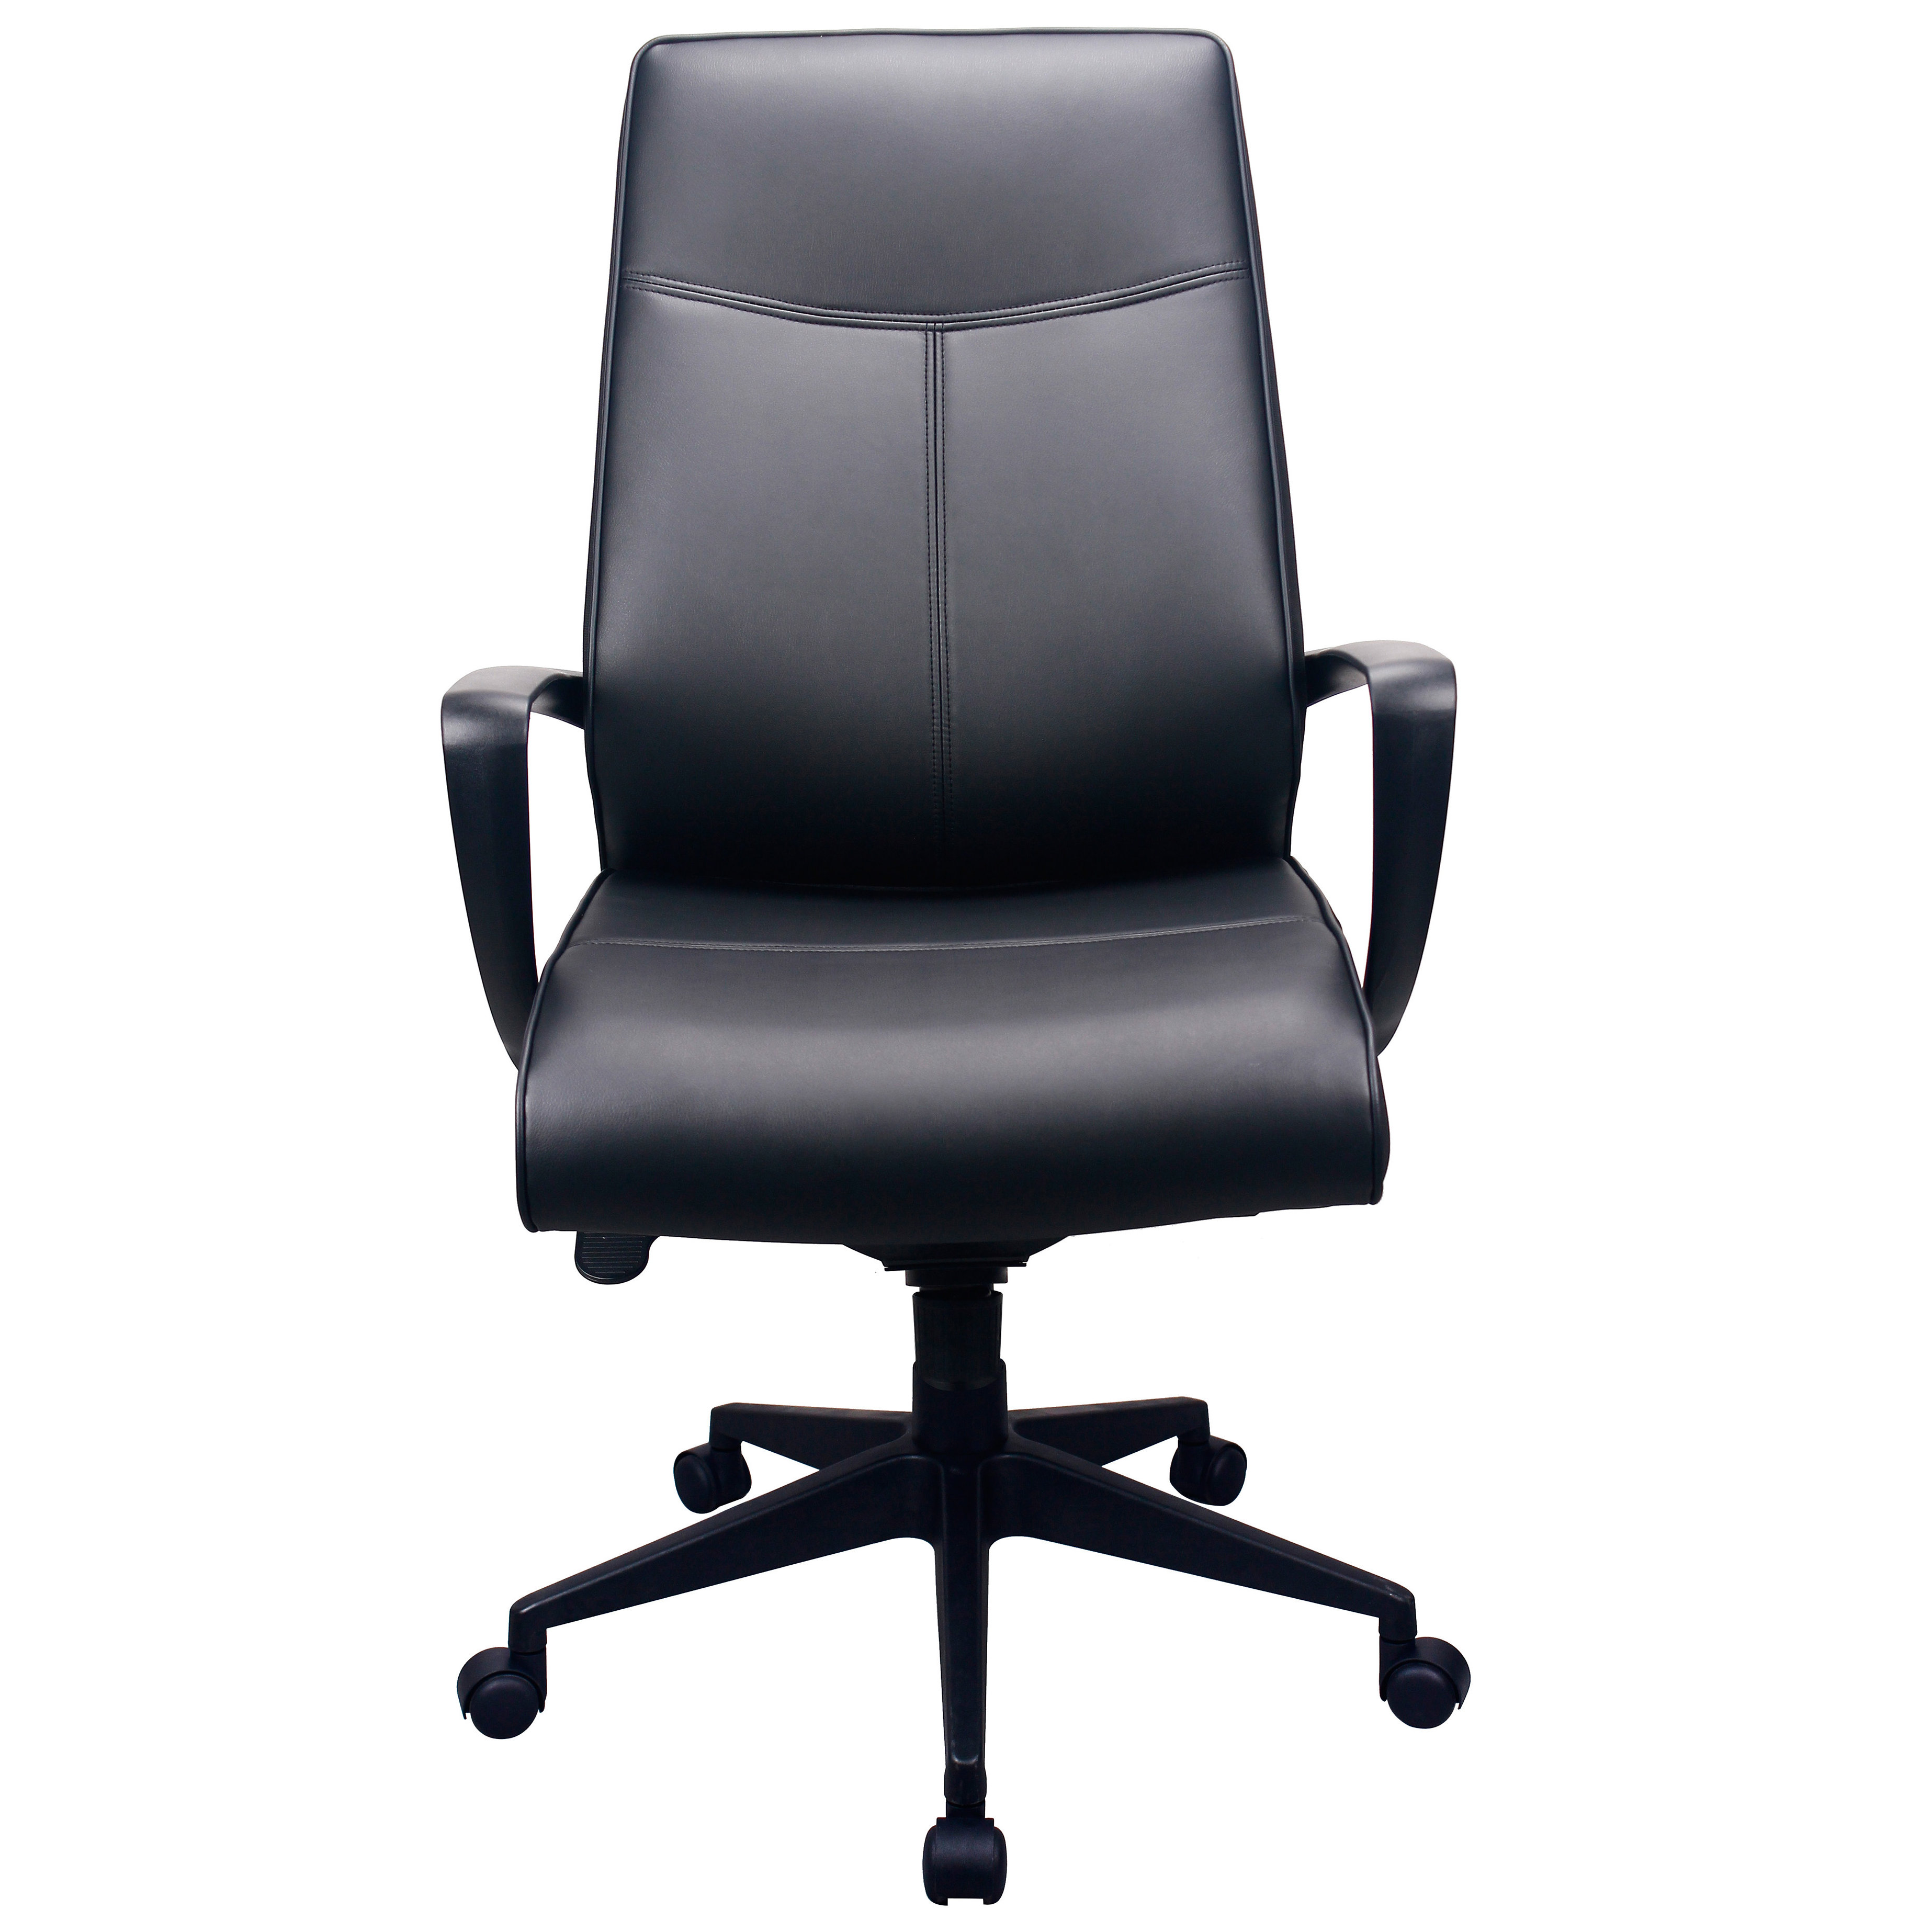 Tempur-Pedic High-Back Leather Executive Office Chair with Arms | Wayfair